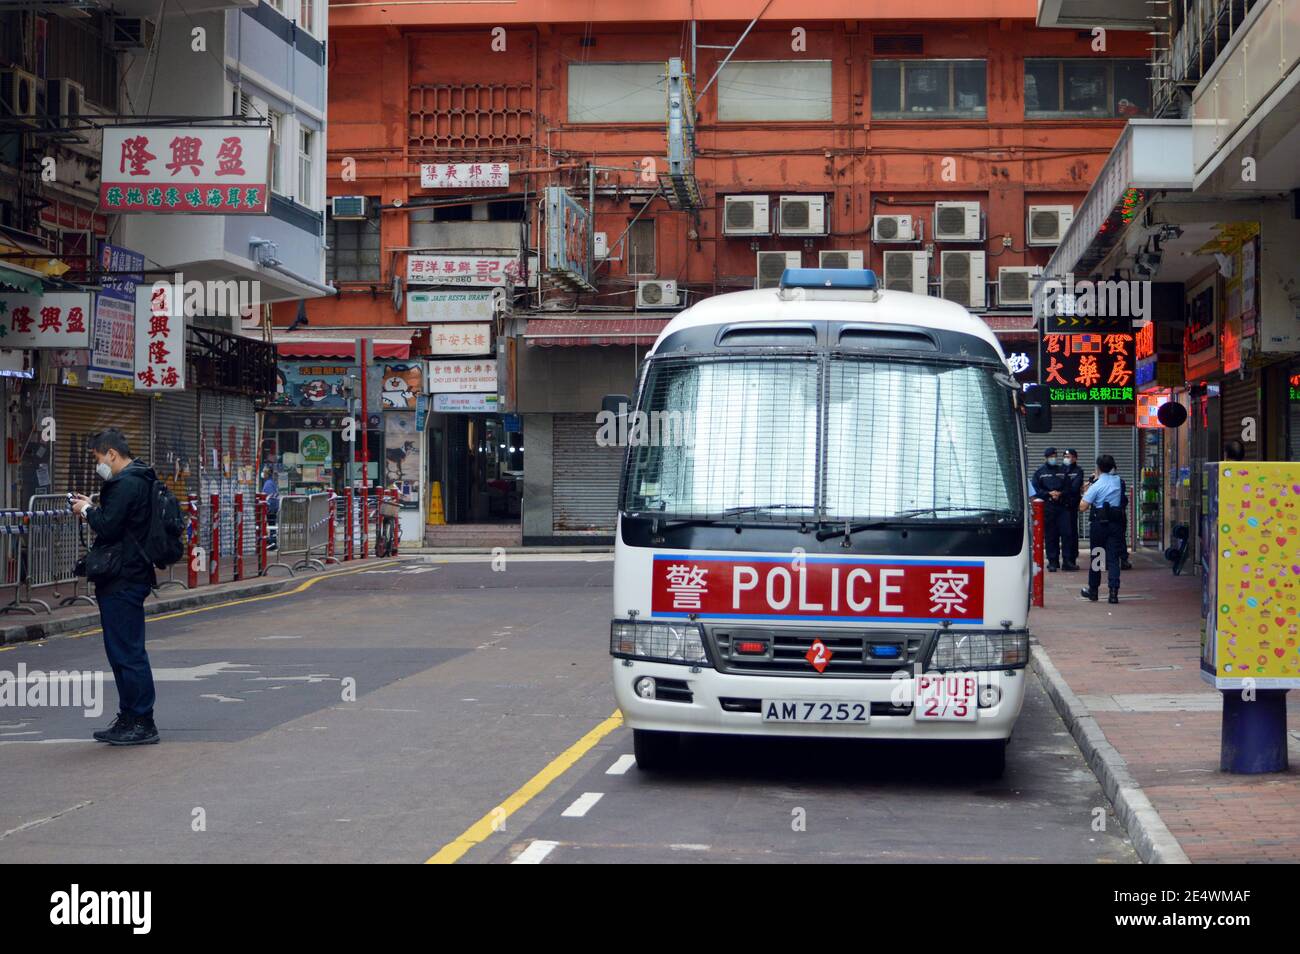 Hong Kong Police van pictured during Covid-19 coronavirus pandemic lockdown in Yau Ma Tei, Kowloon, Hong Kong in January 2021 Stock Photo